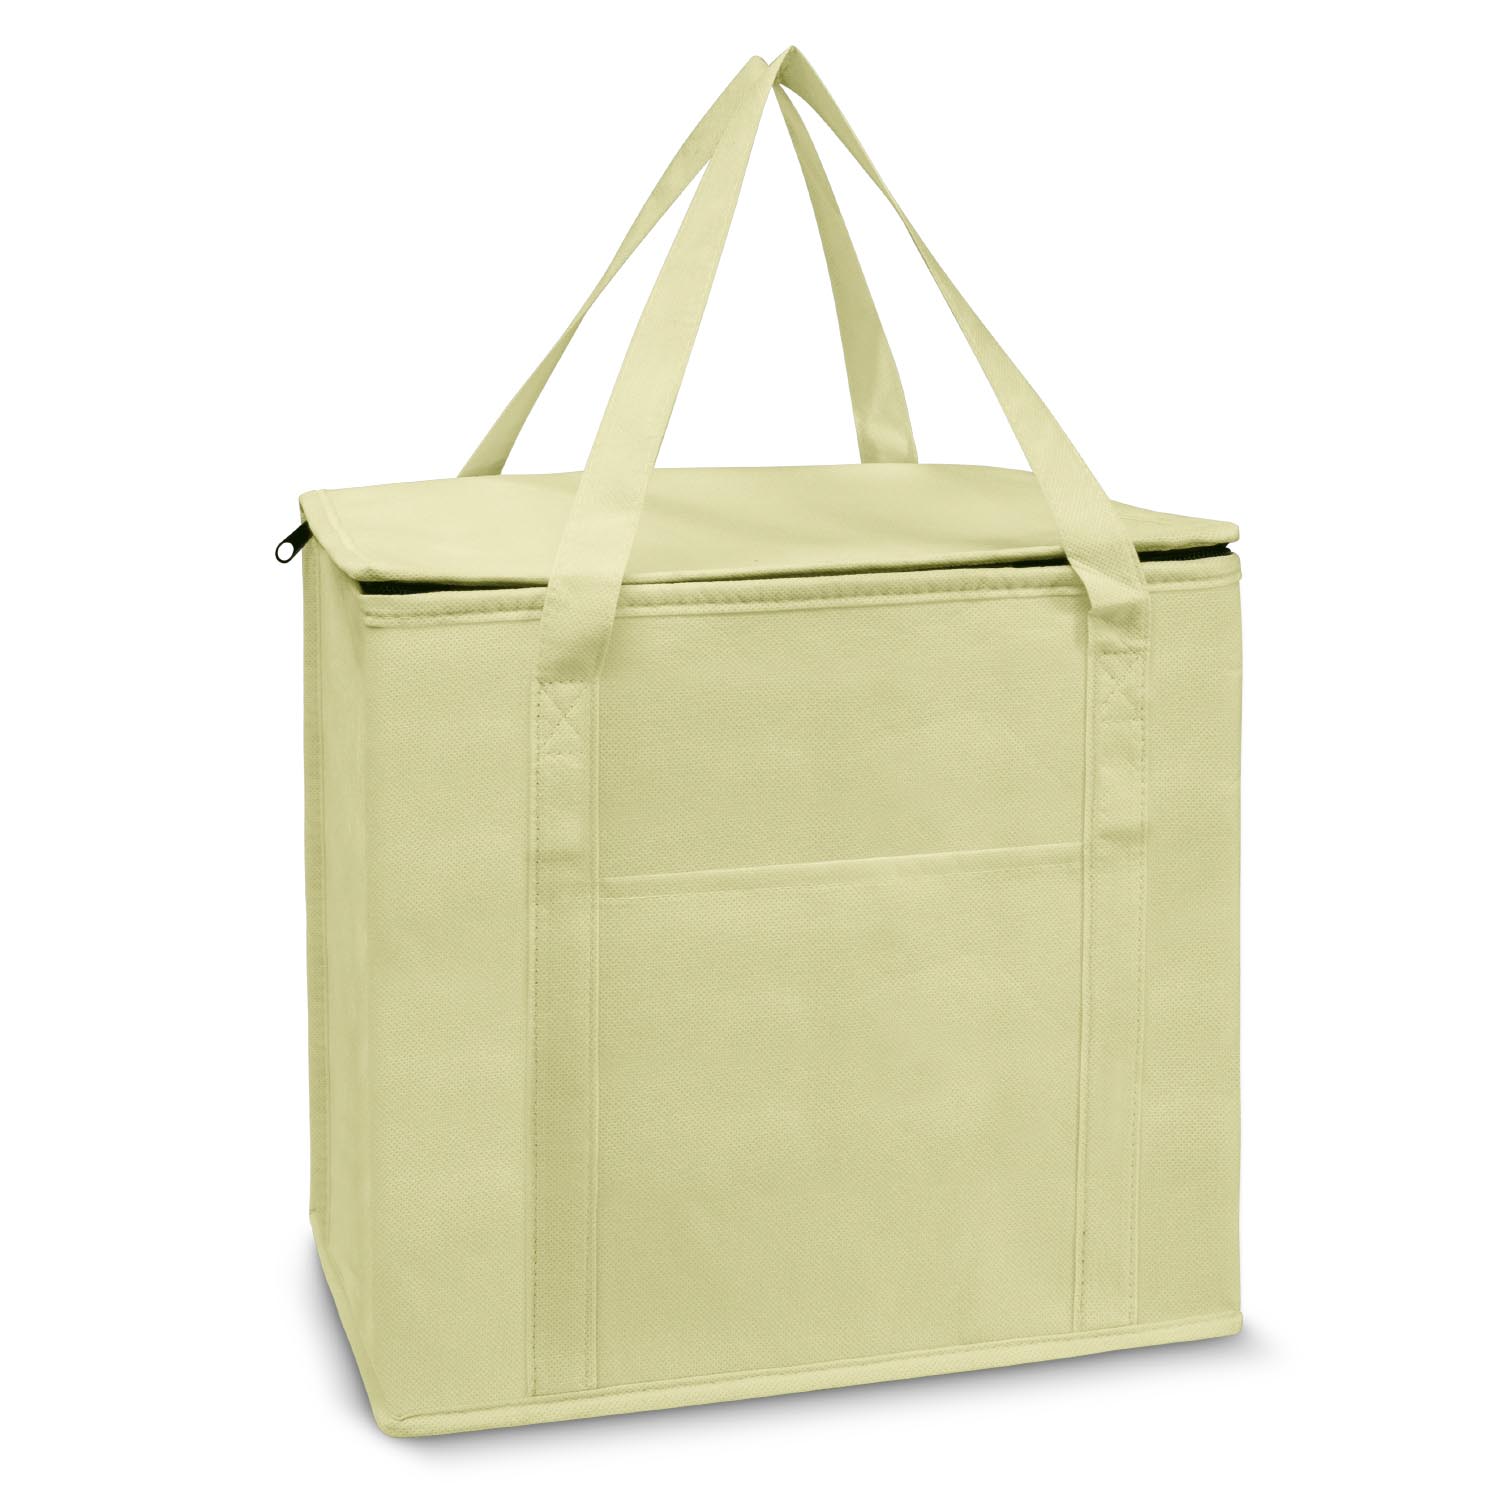 Get Sandal Sierra Shopping Cooler Bag Online in Perth